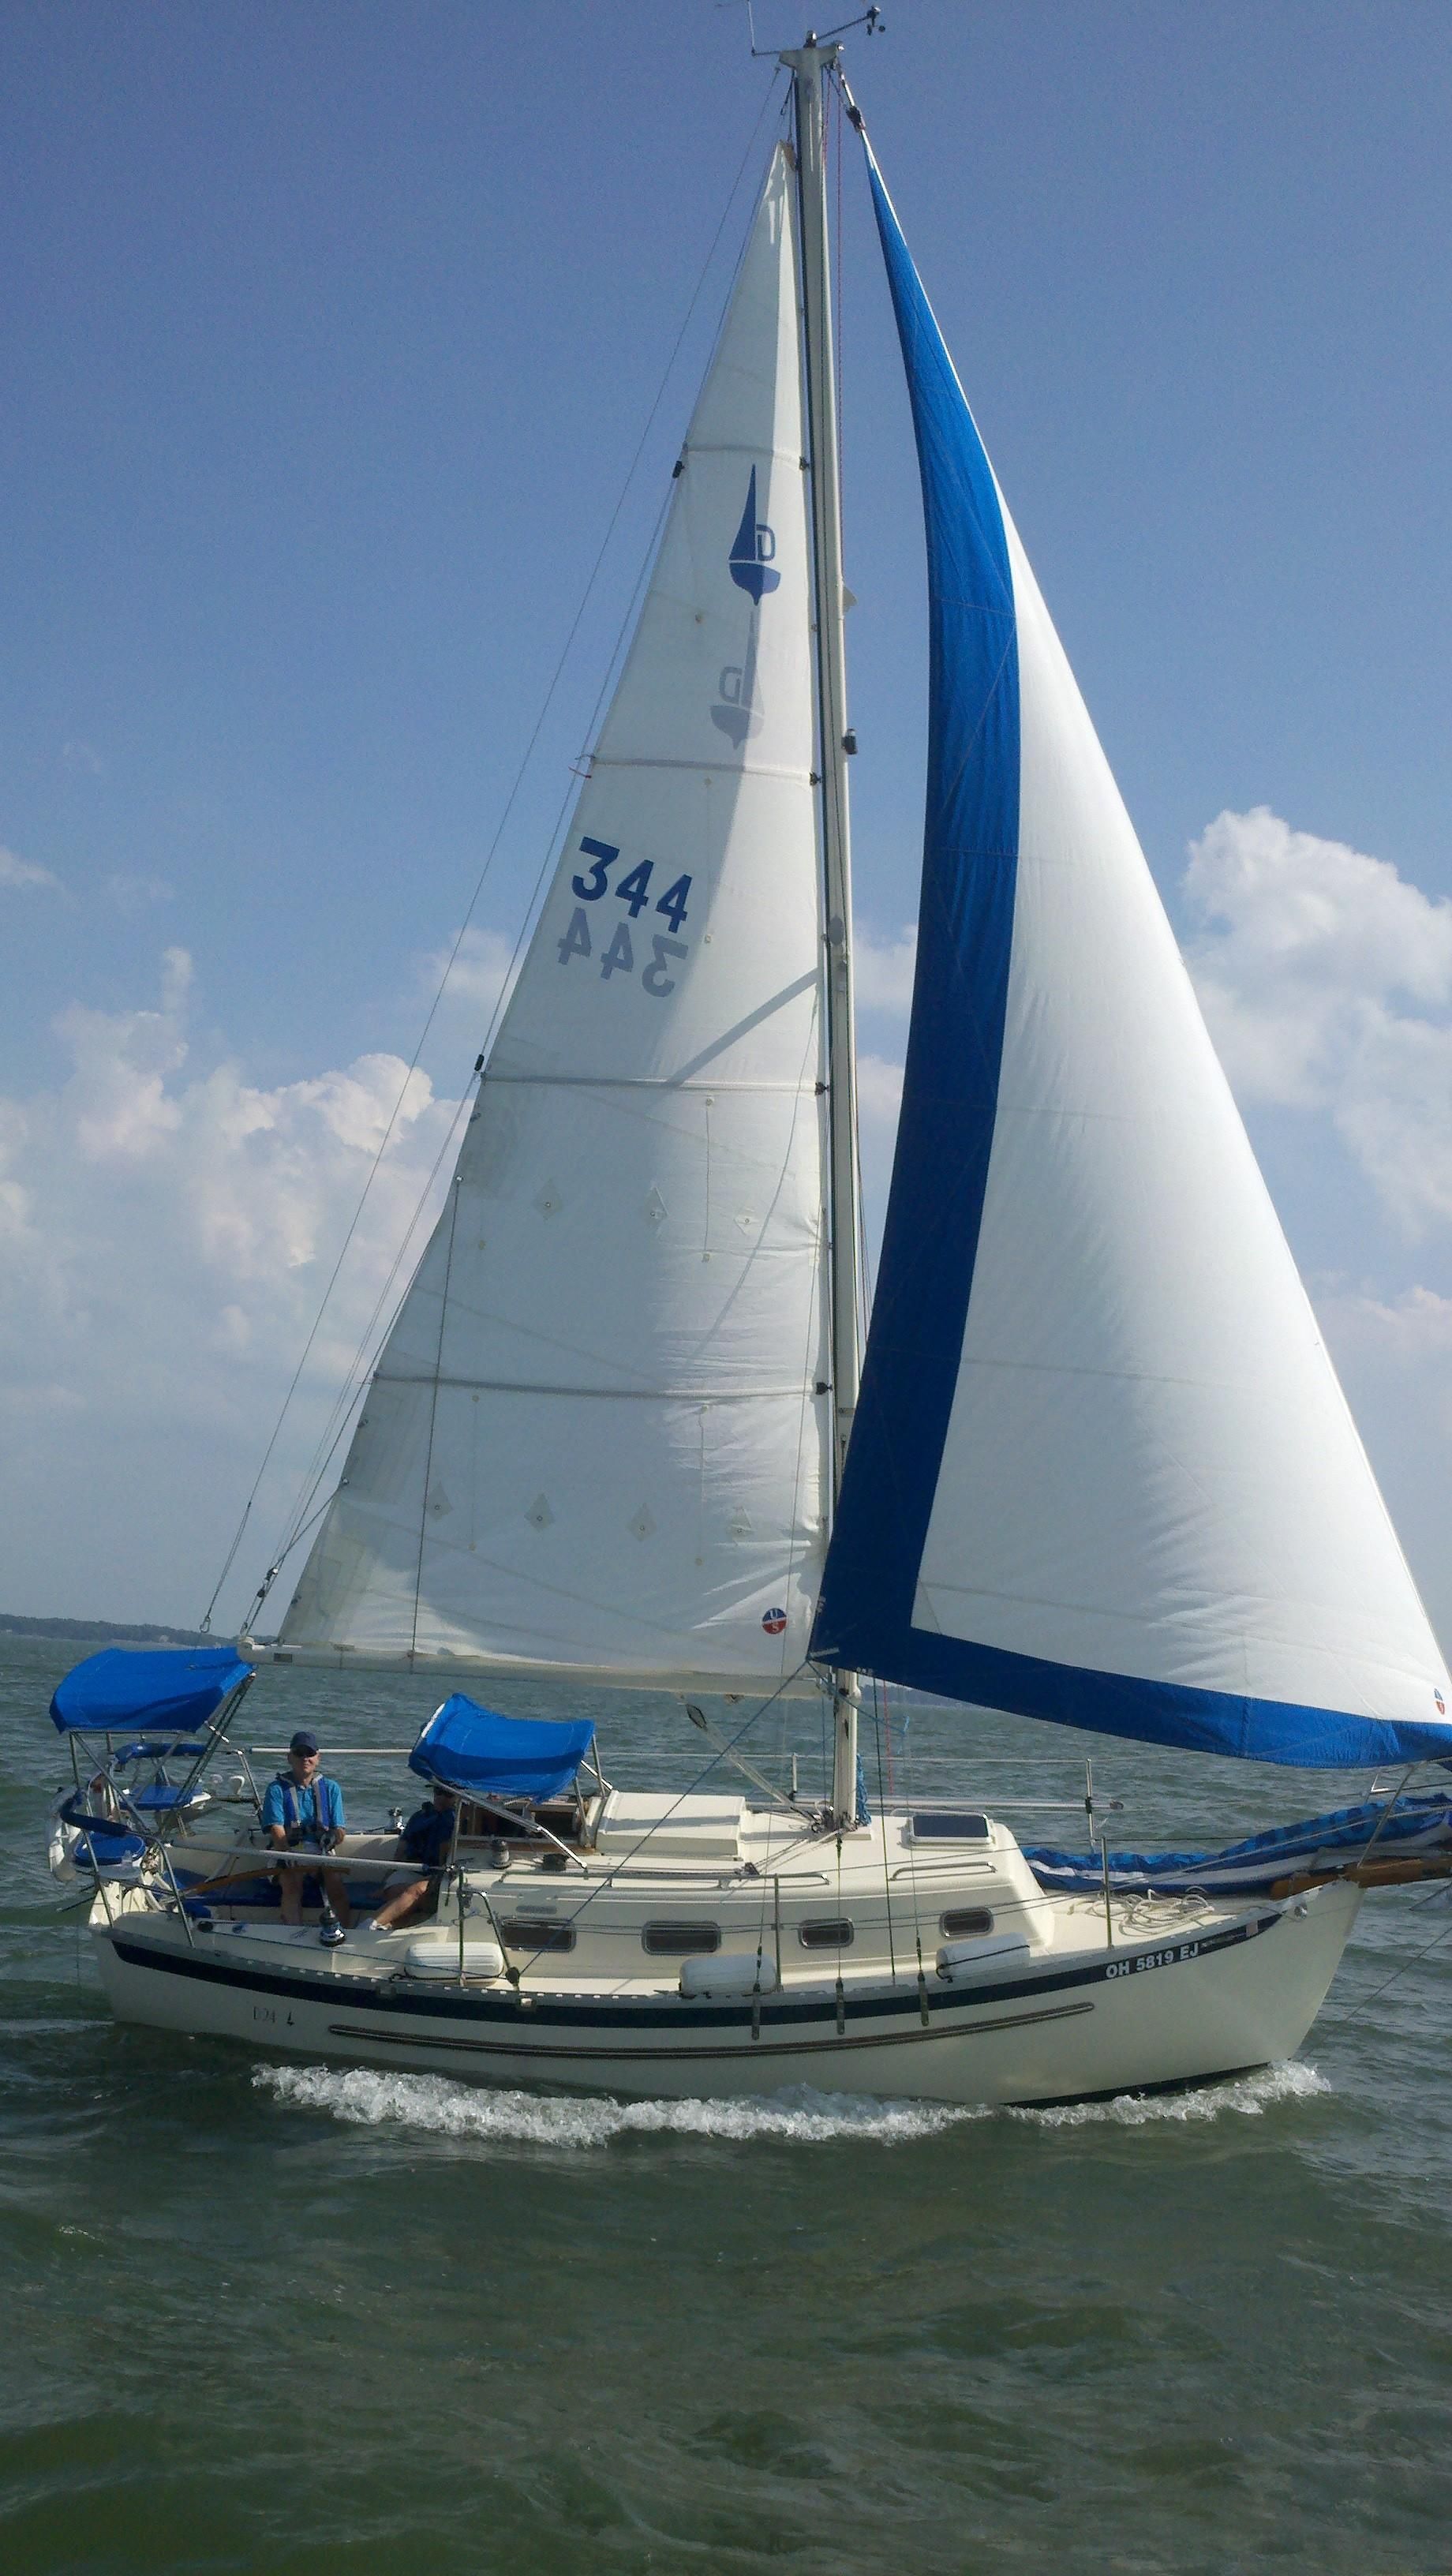 dana 24 sailboat for sale